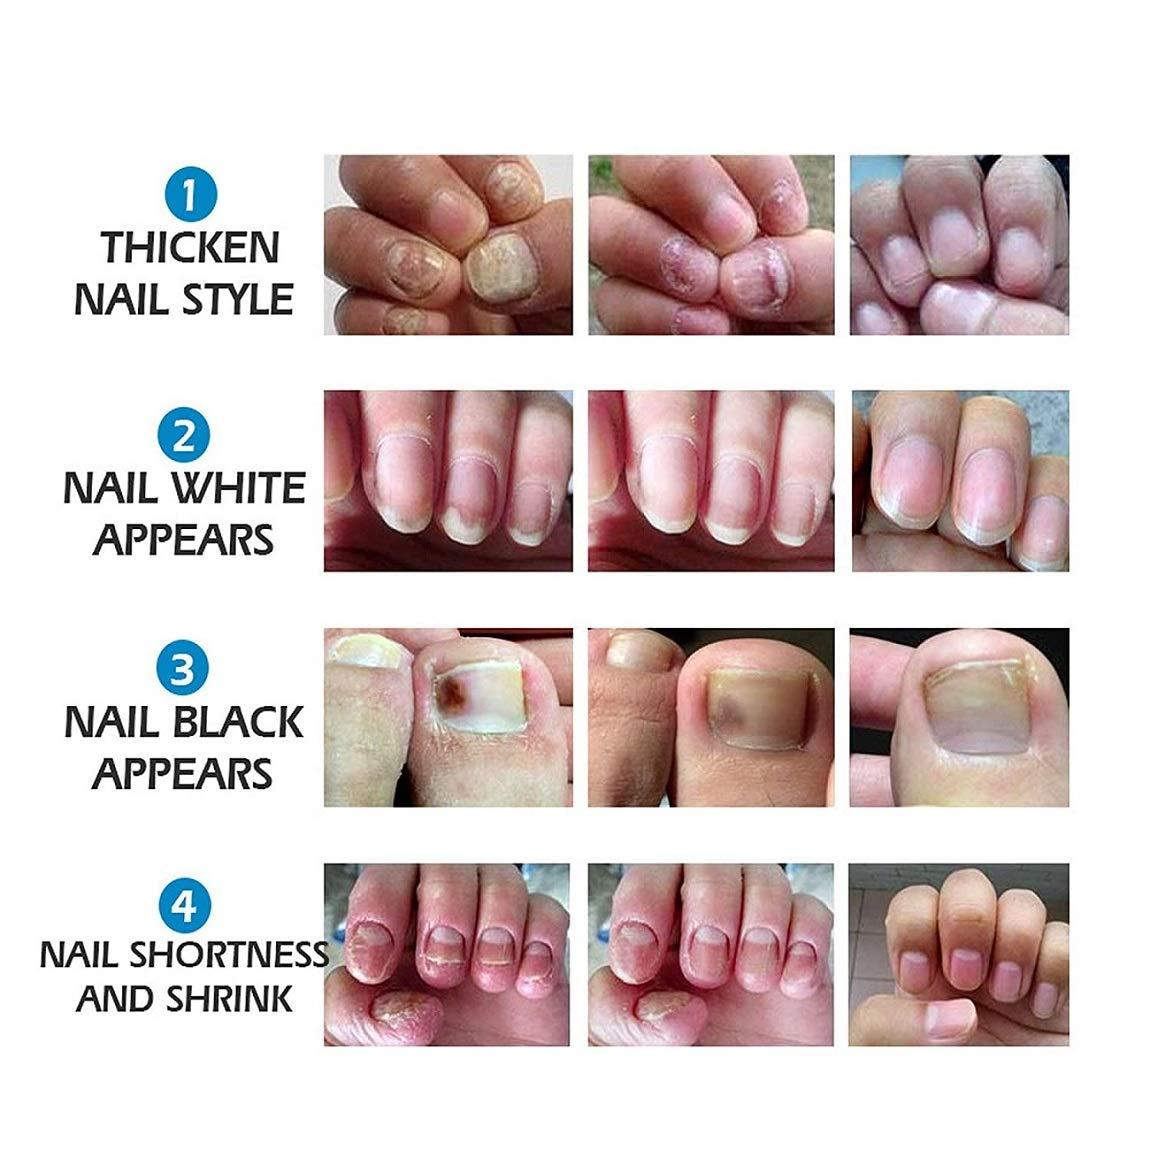 Nail Fungus Treatment For Toenail And Fingernail, Maximum Strength Nail |  eBay